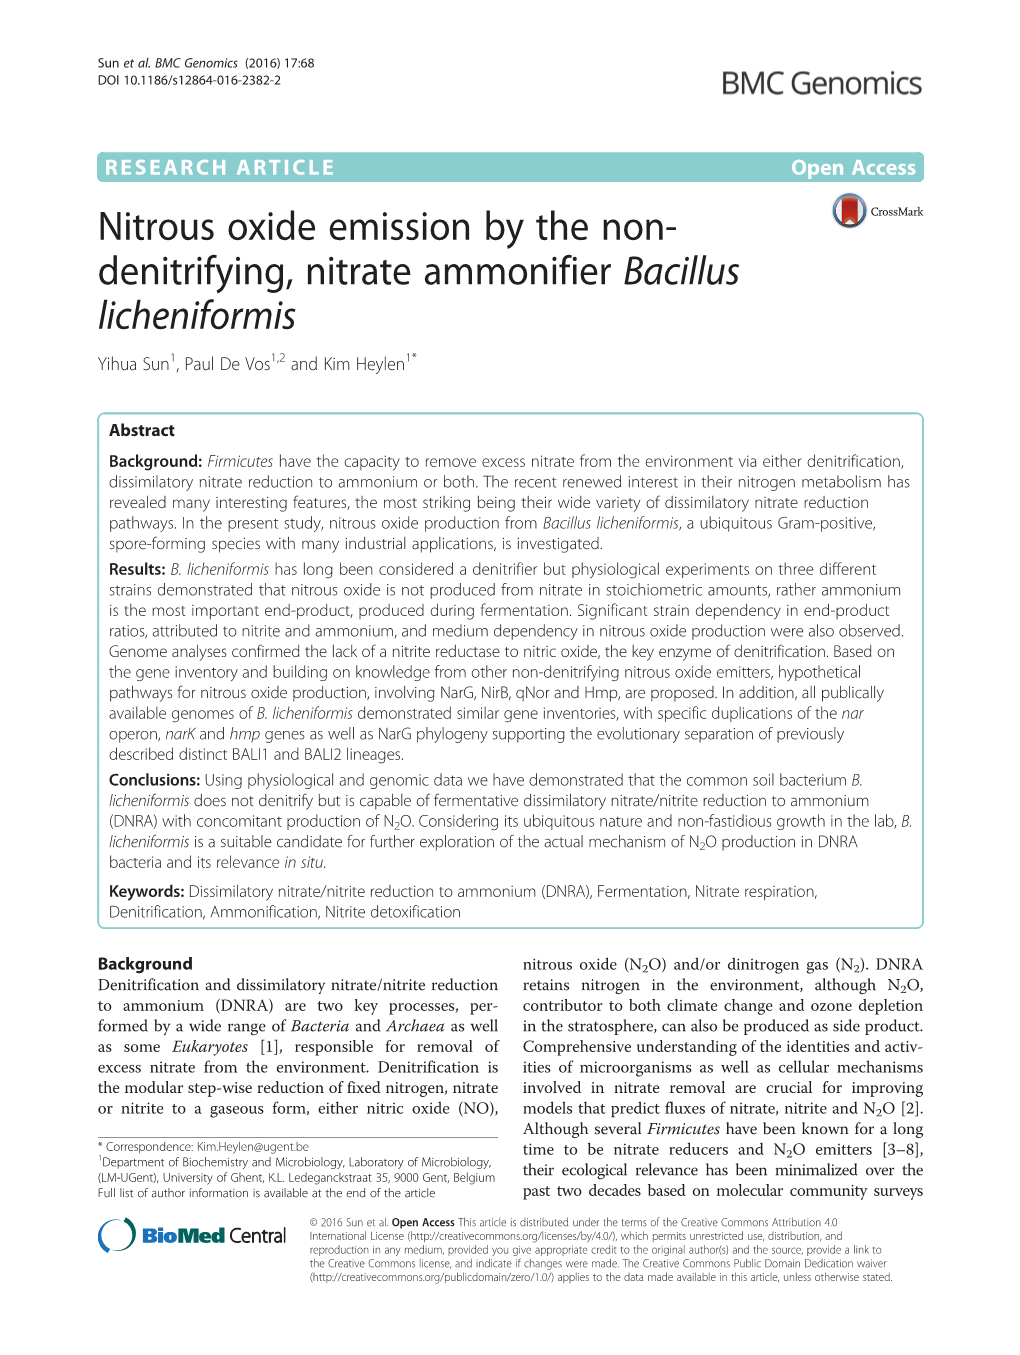 Nitrous Oxide Emission by the Non- Denitrifying, Nitrate Ammonifier Bacillus Licheniformis